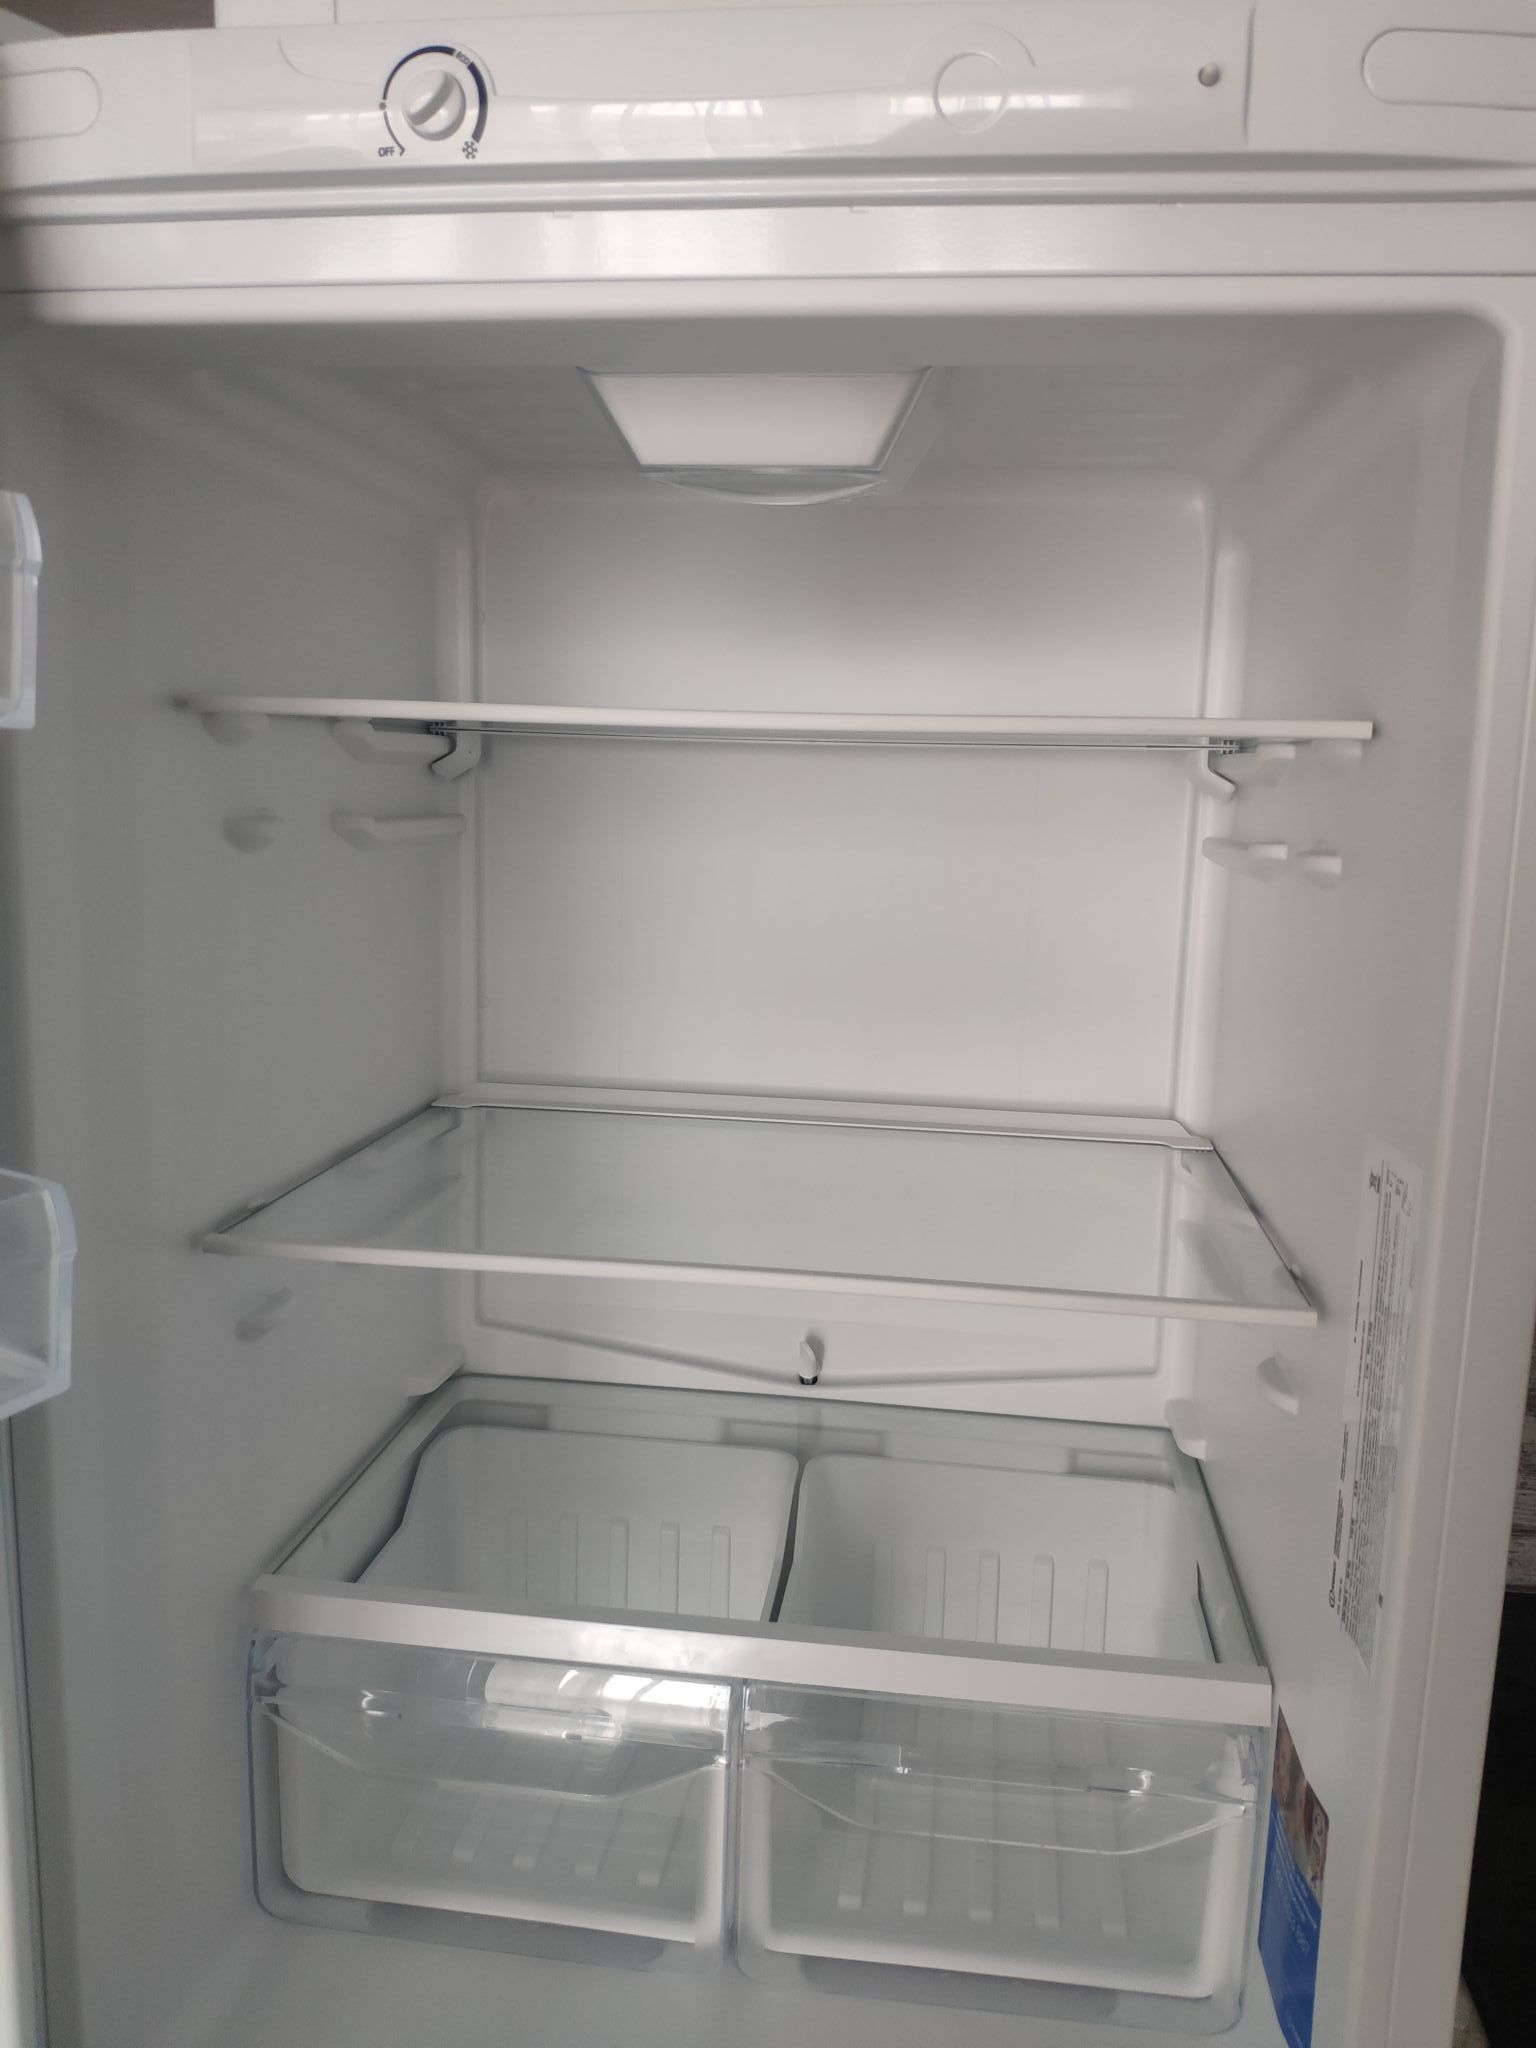 Холодильник купить цена индезит. Холодильник Индезит ds4160. Холодильник Индезит 4160w. Холодильник Индезит 23999.